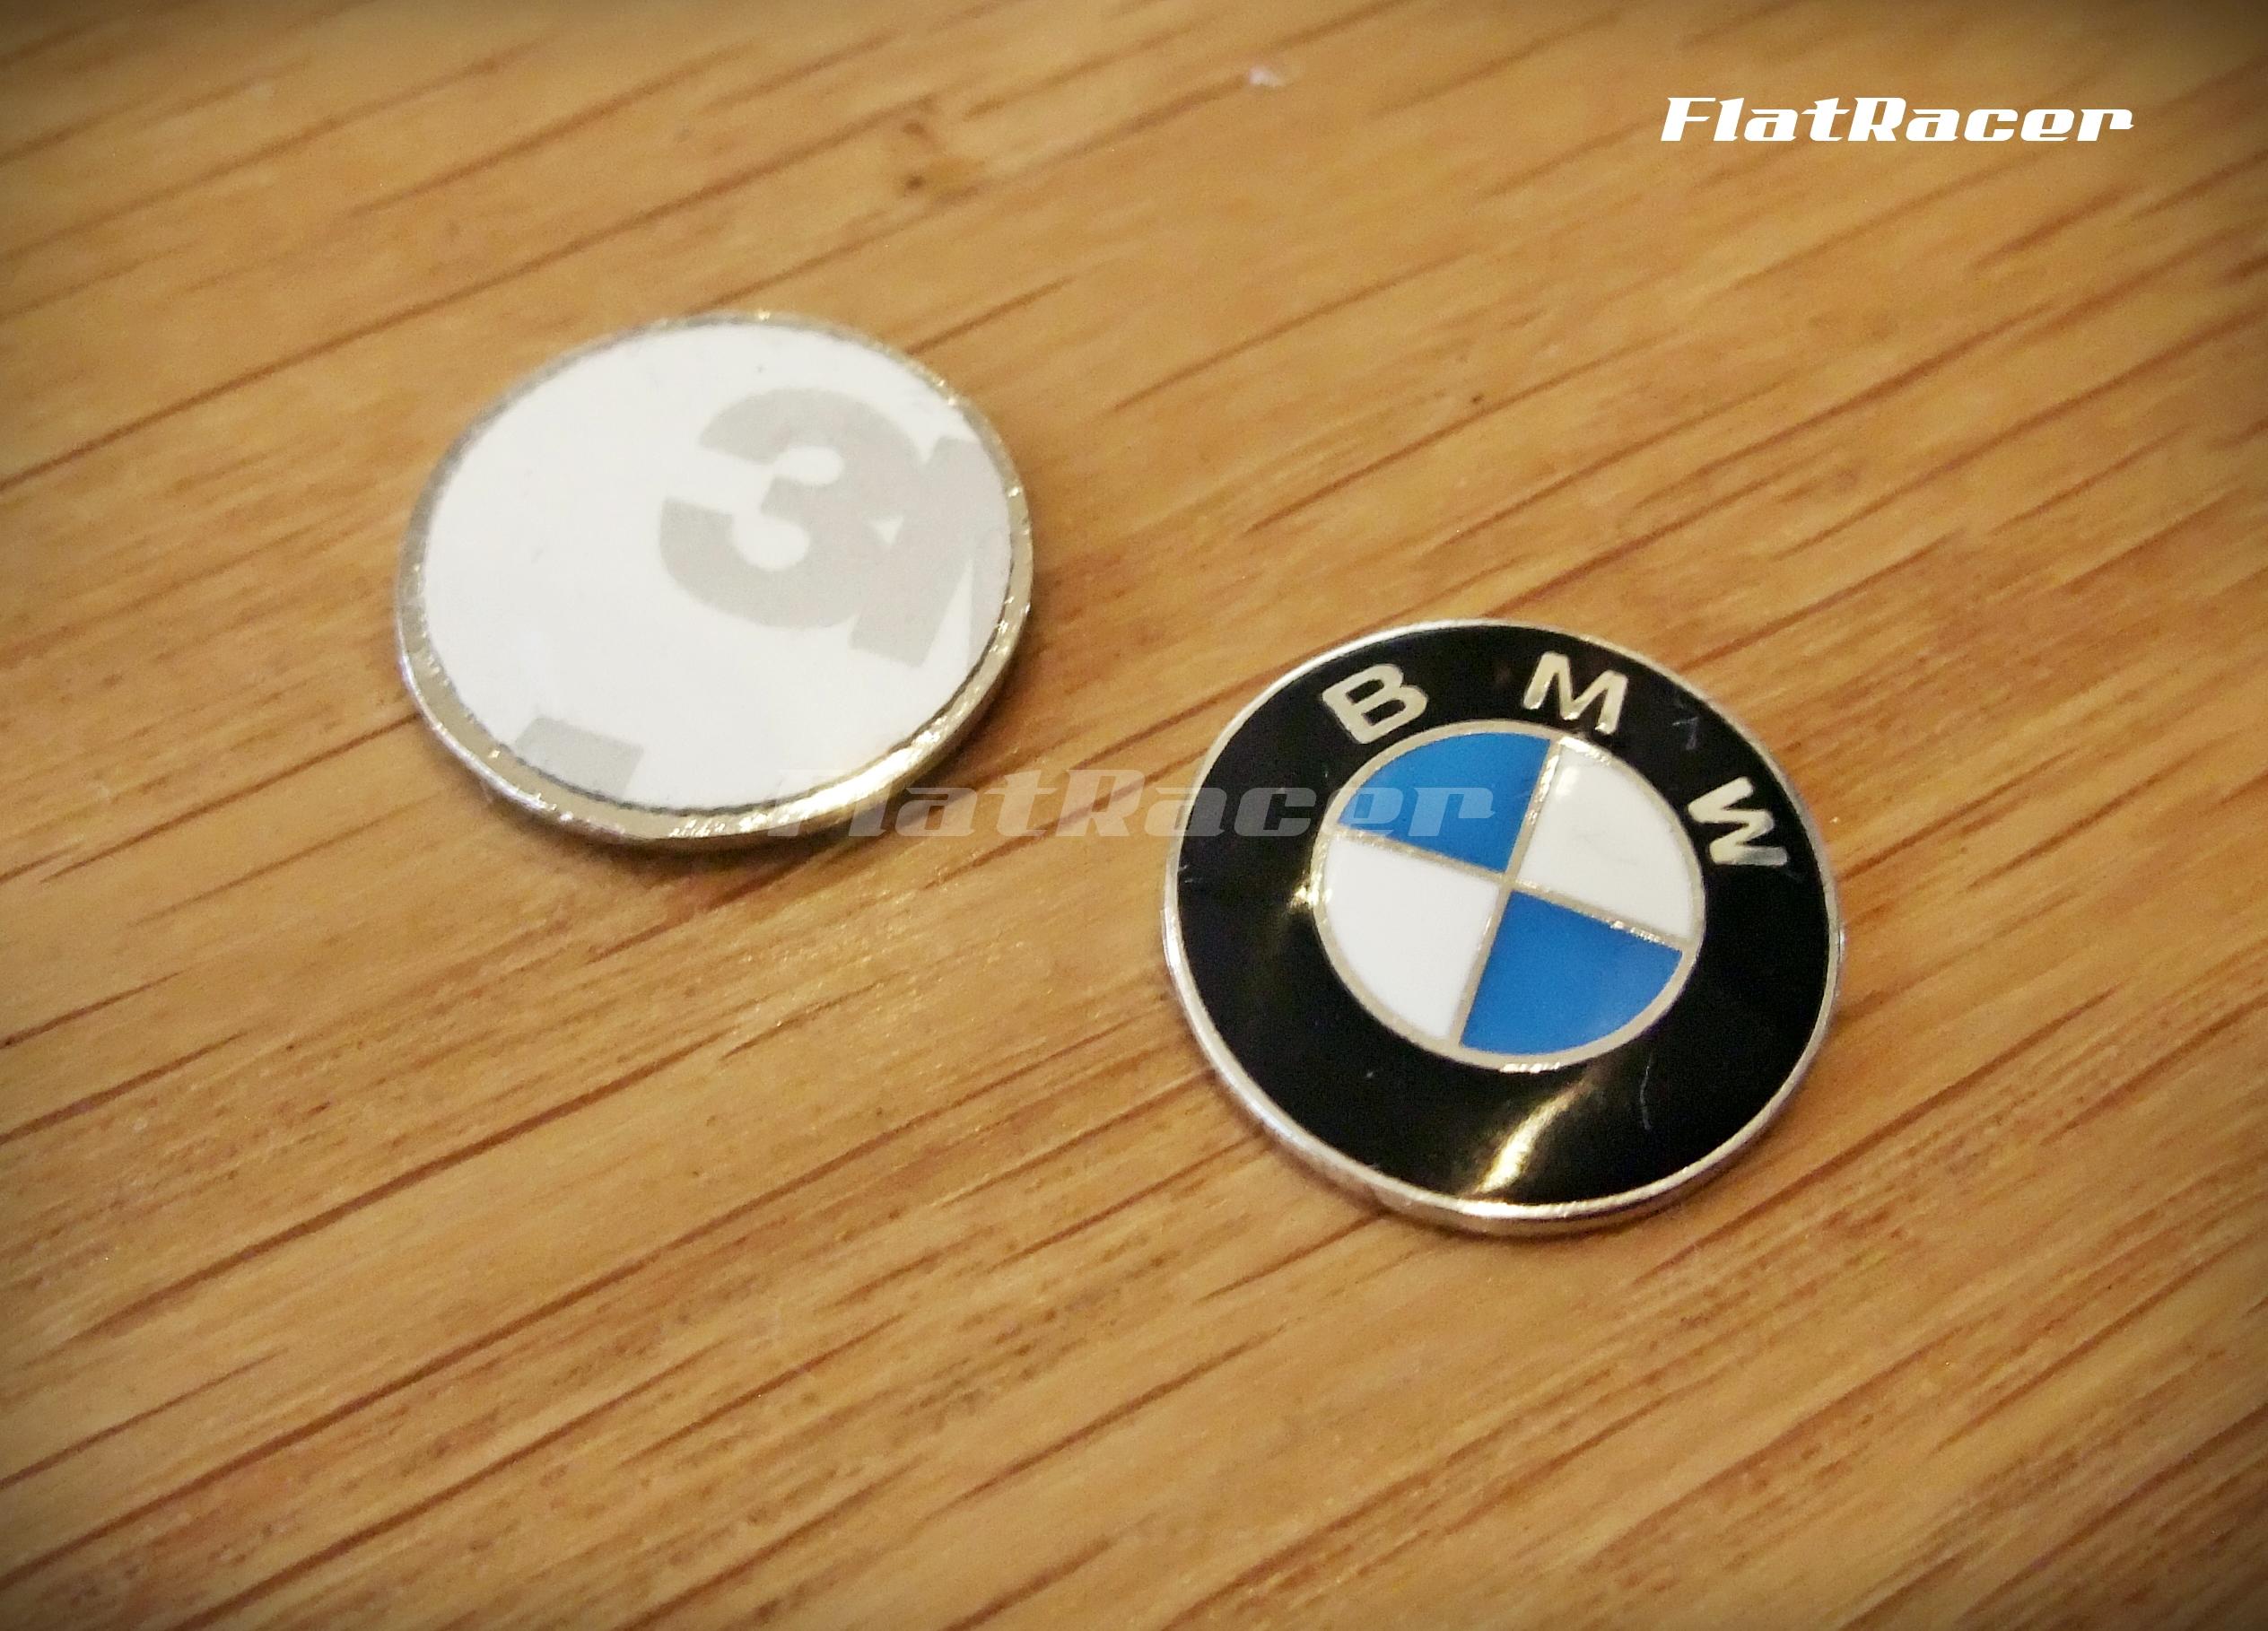 FlatRacer BMW 16mm enamel badges with 3M adhesive backs